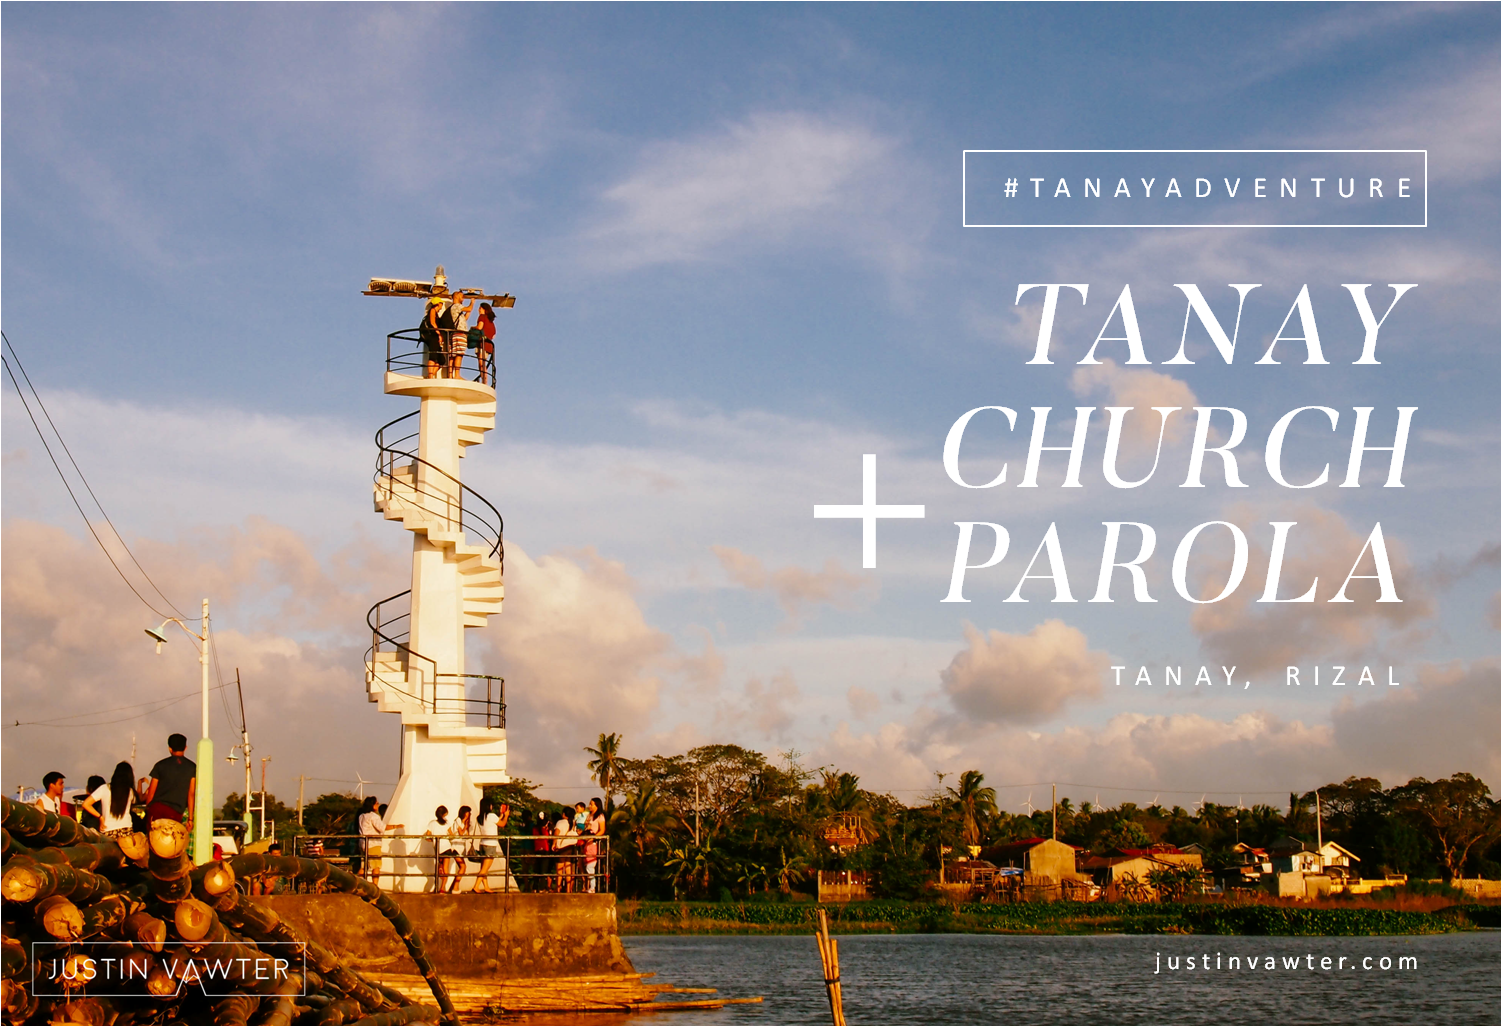 Tanay Adventure Tanay Church and Parola Justin Vawter